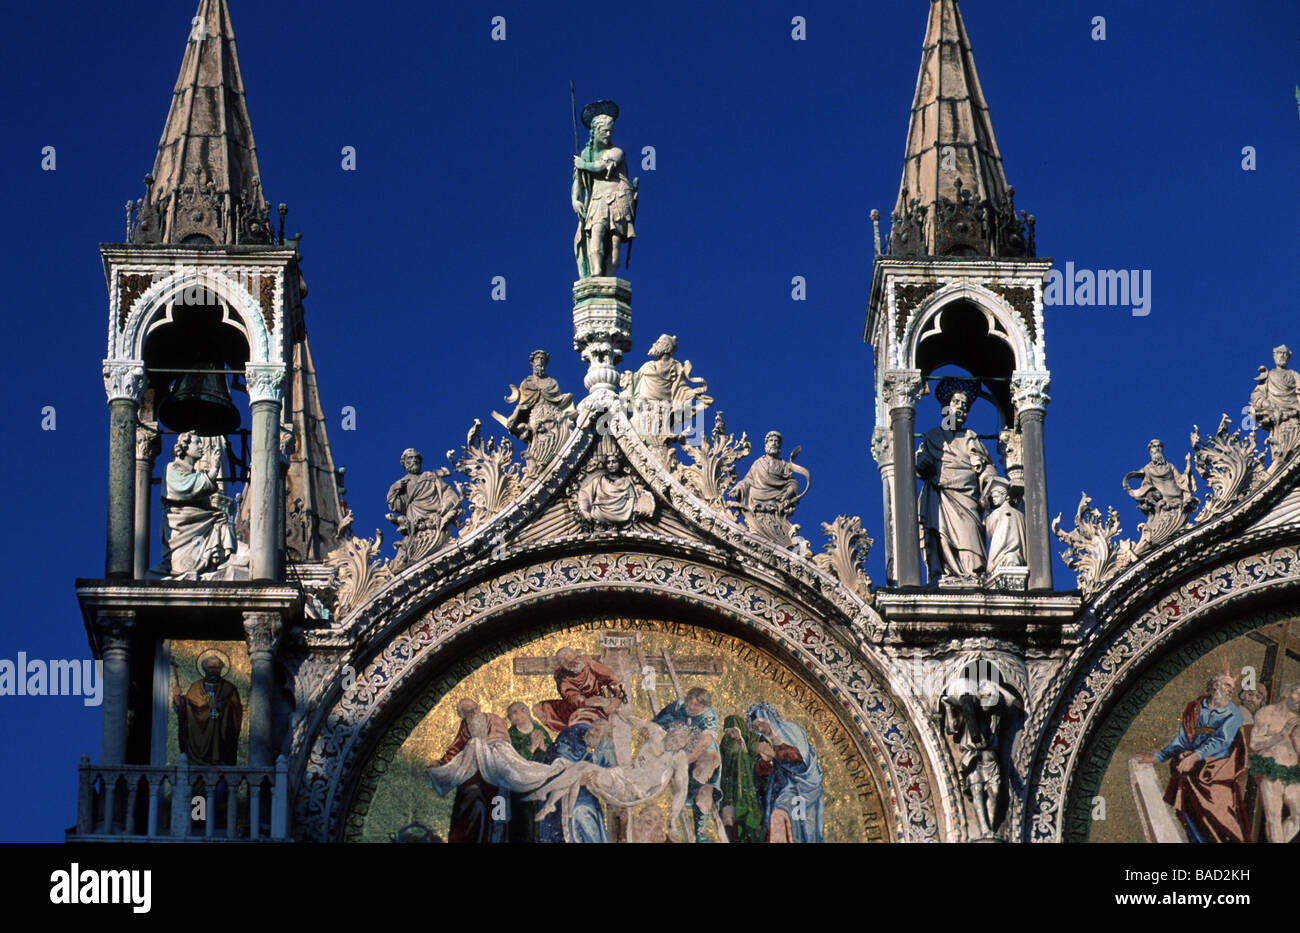 Italien Venedig Stadtteil San Marco Piazza San Marco Markuskirche Basilica di San Marco Türme und Giebelspitzen Stock Photo